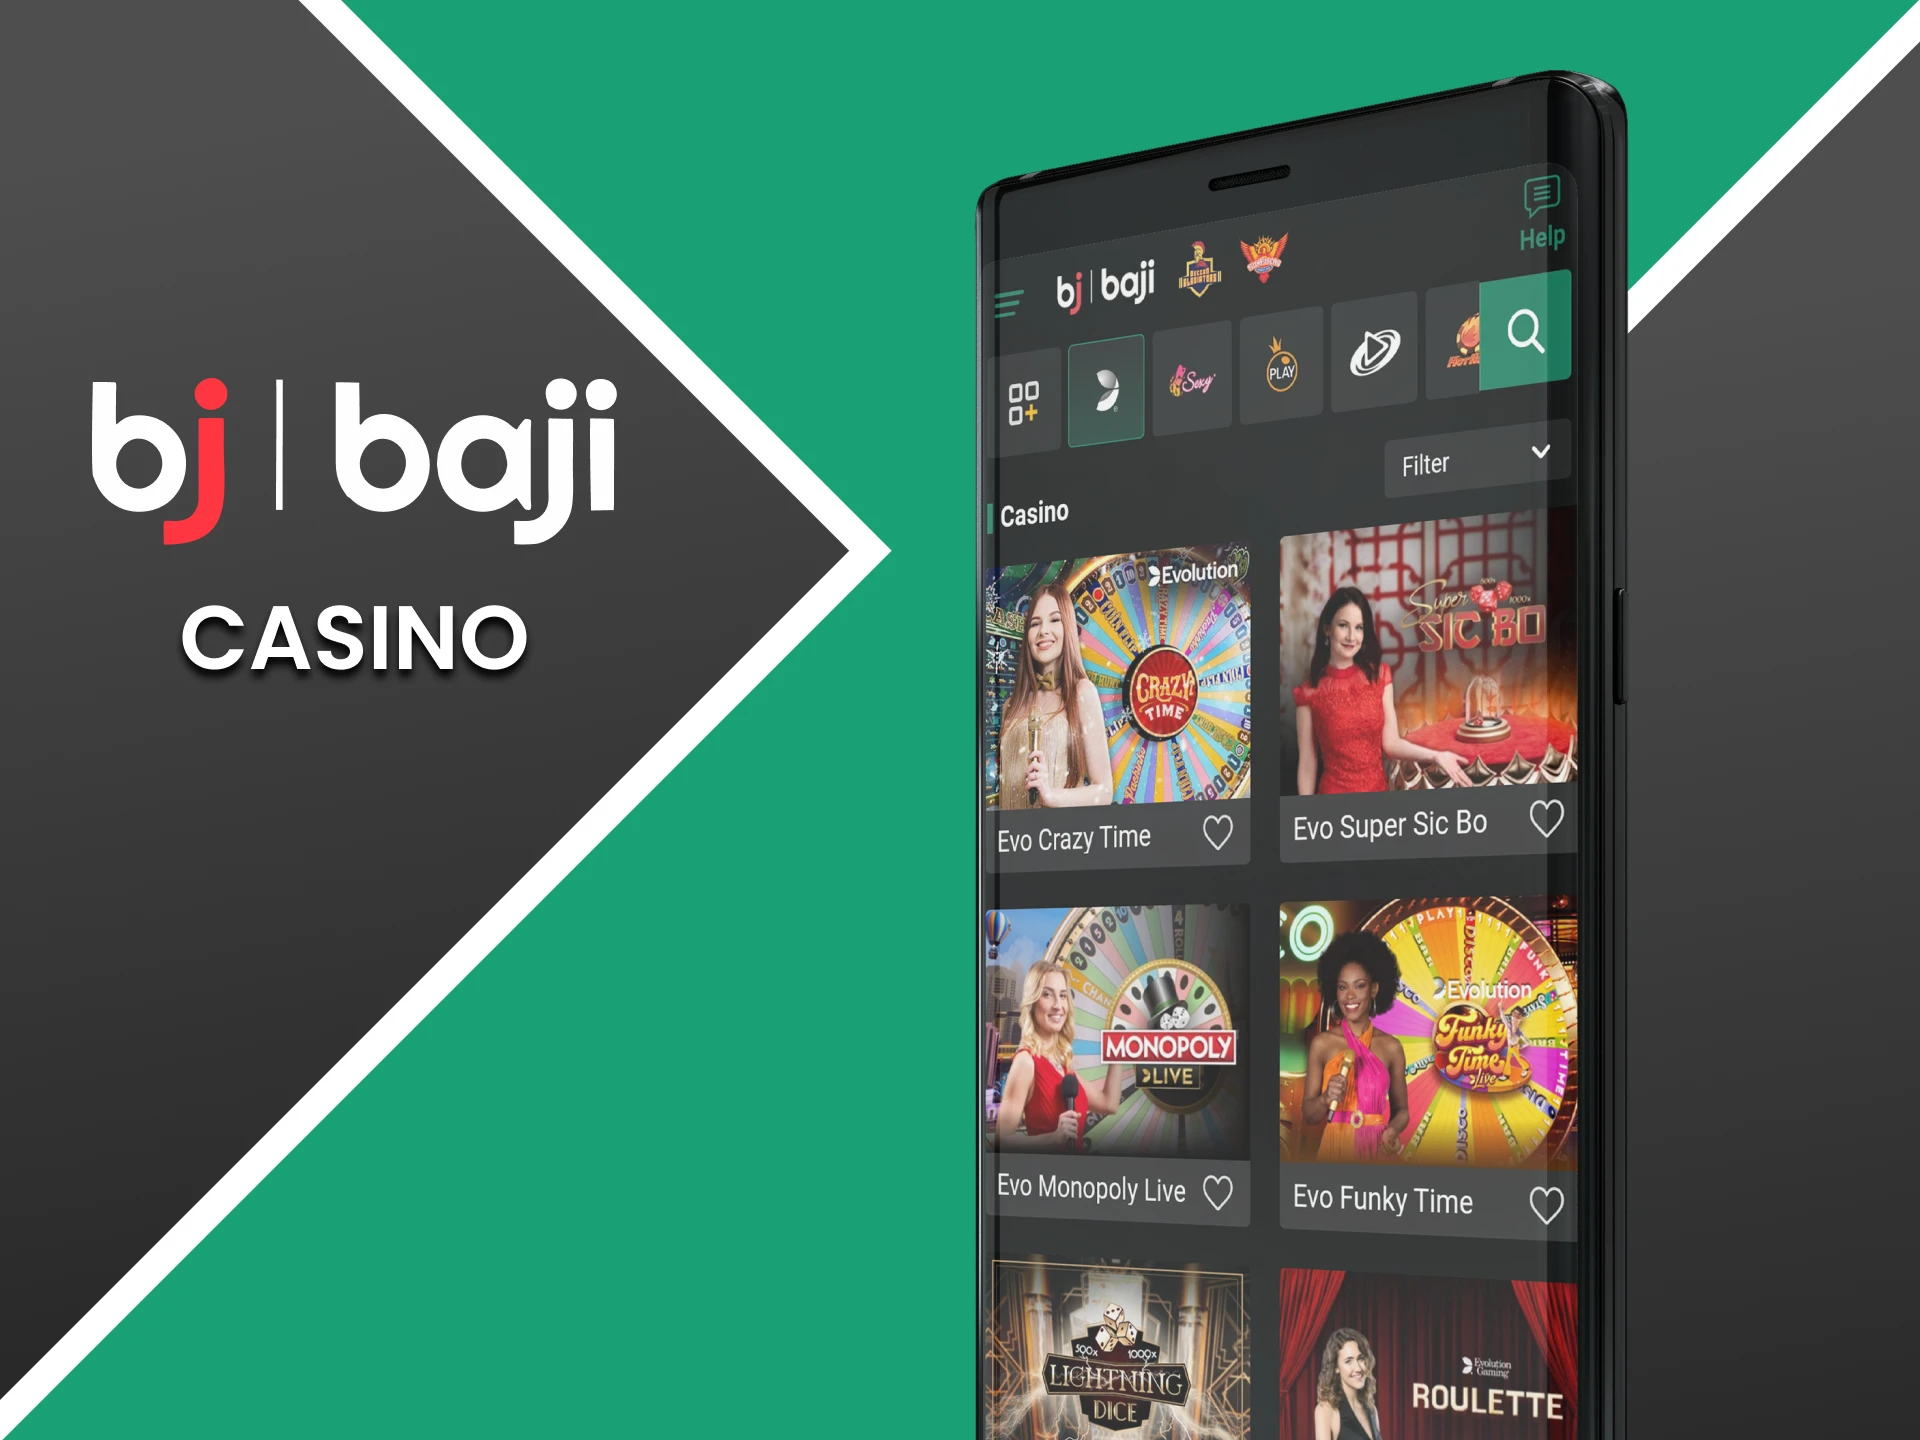 Play casino games in the Baji app.